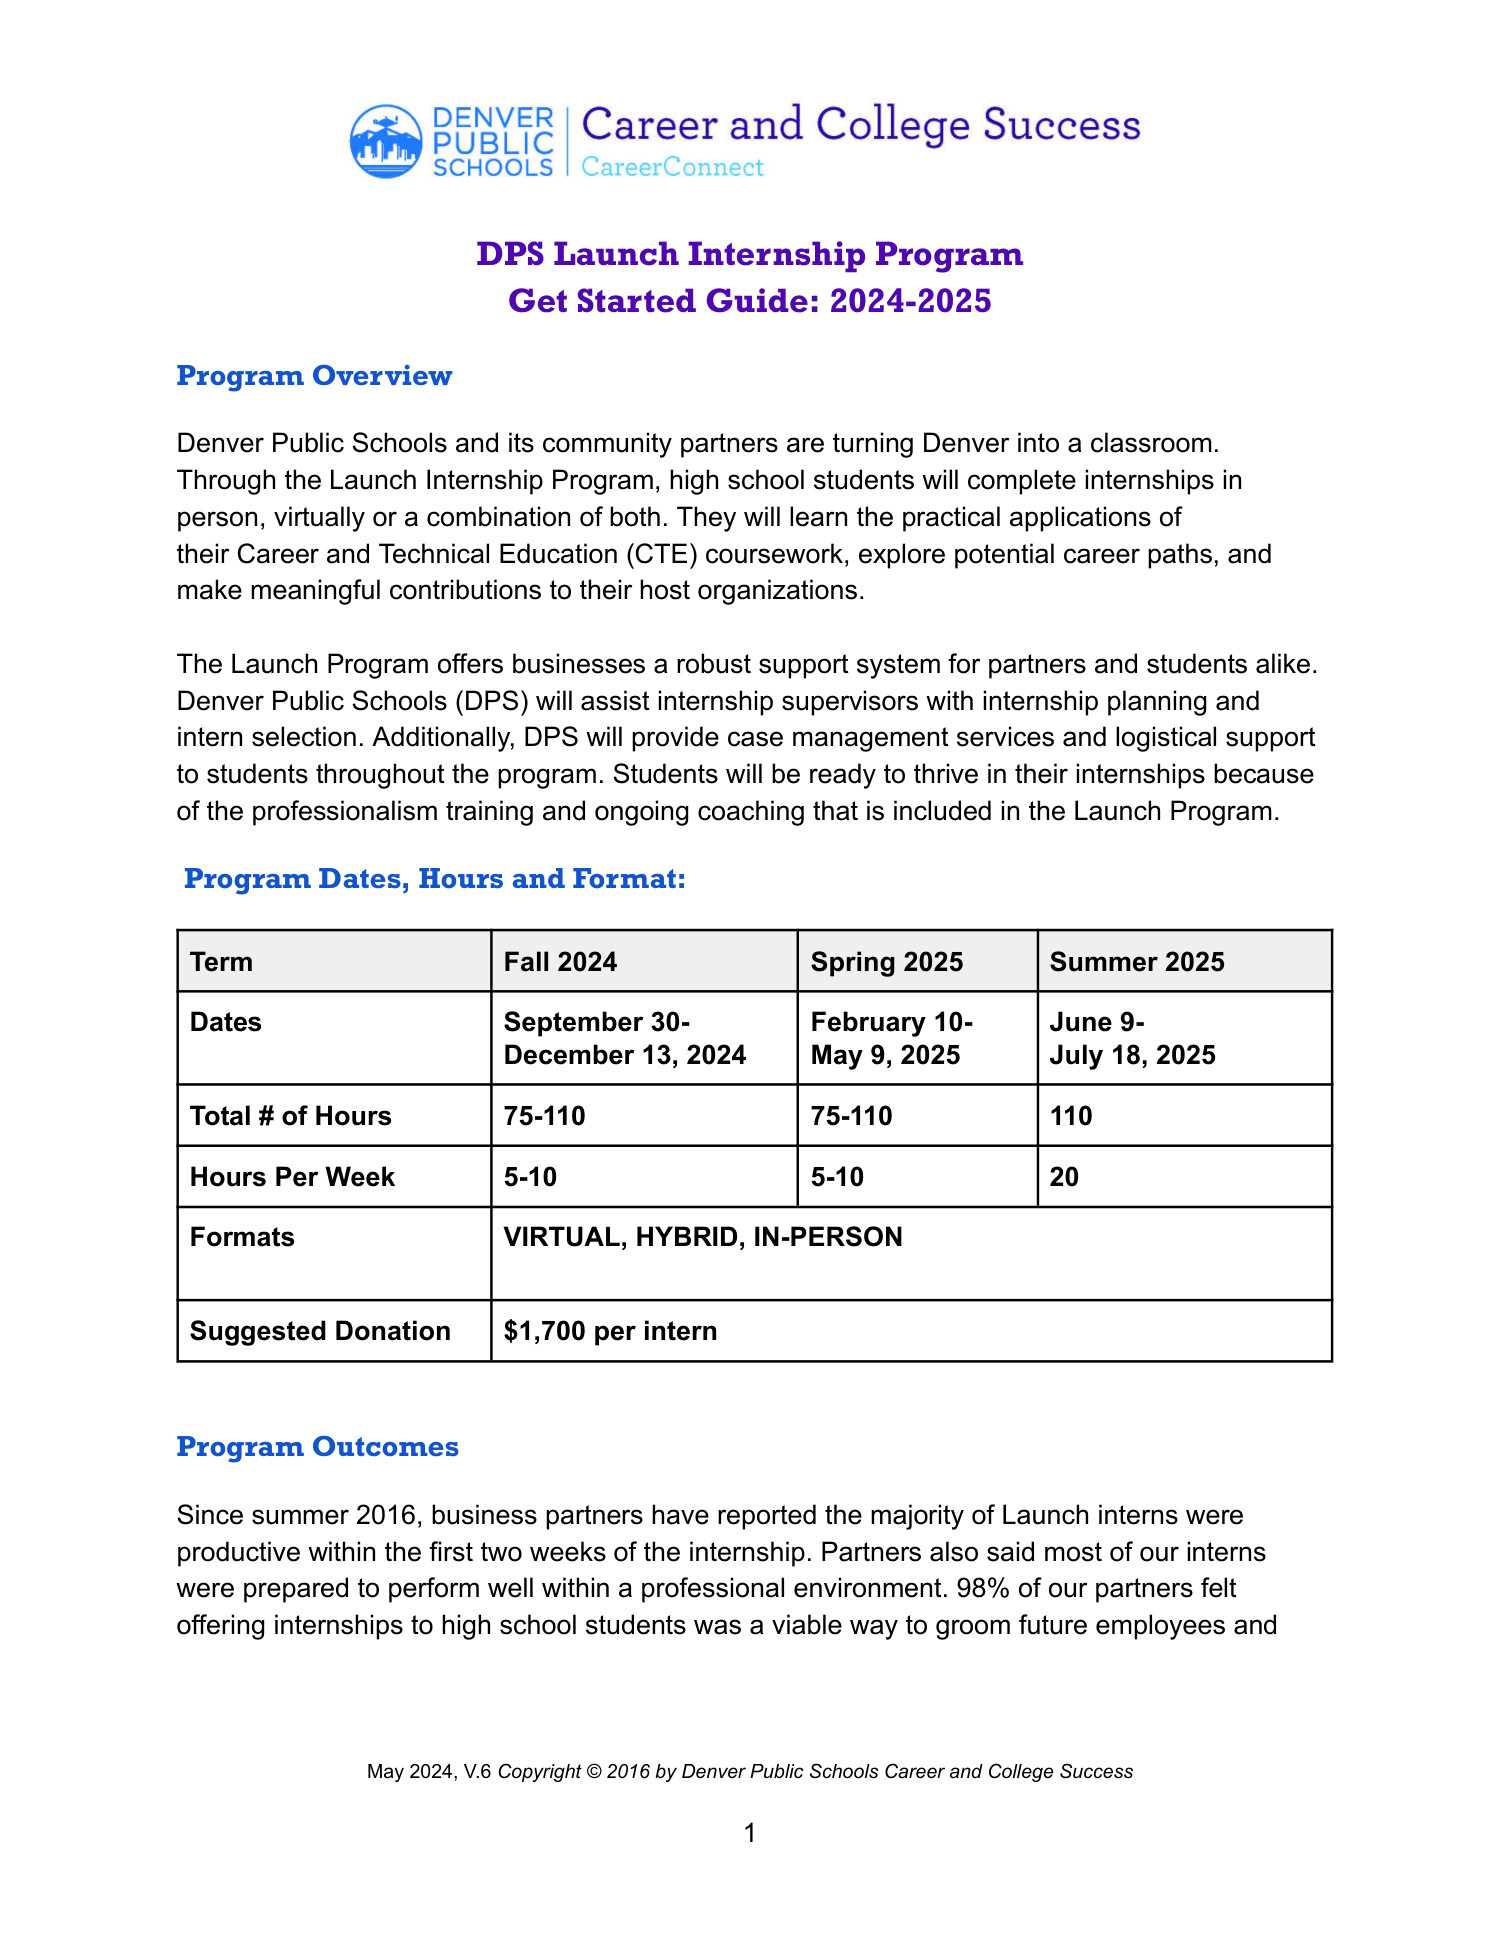 DPS Launch Internship Program Get Started Guide (20232024).pdf